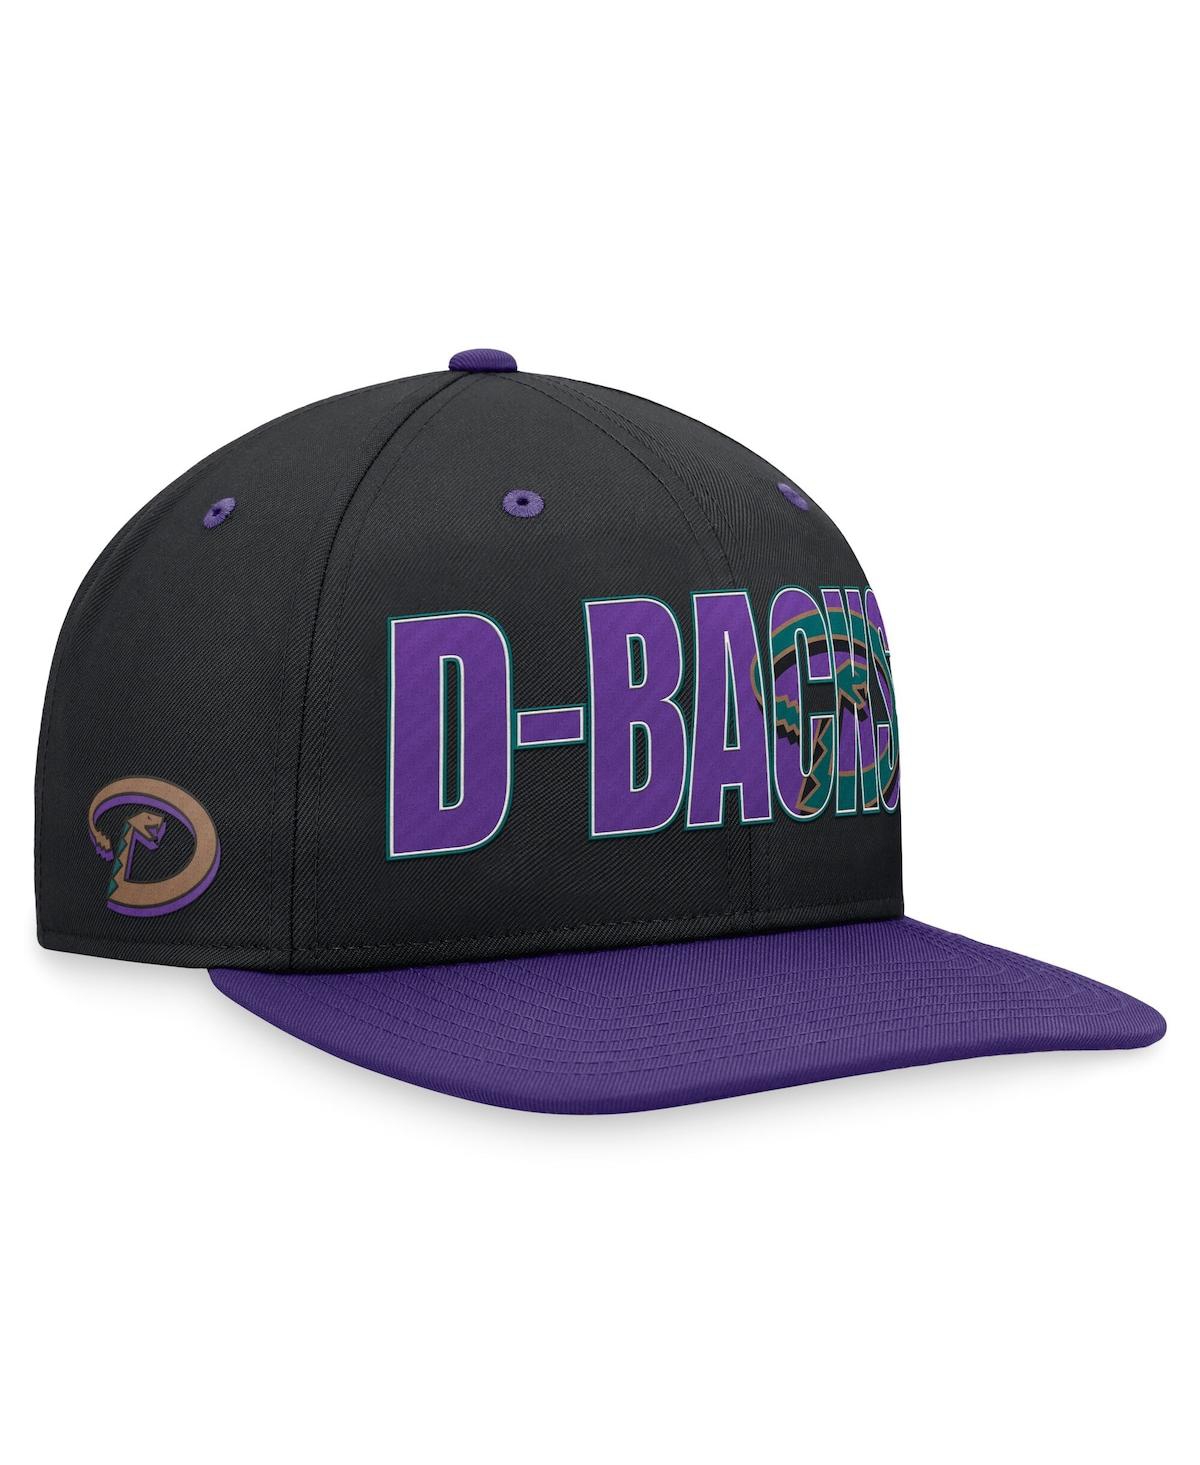 San Diego Padres Classic99 Color Block Men's Nike MLB Adjustable Hat